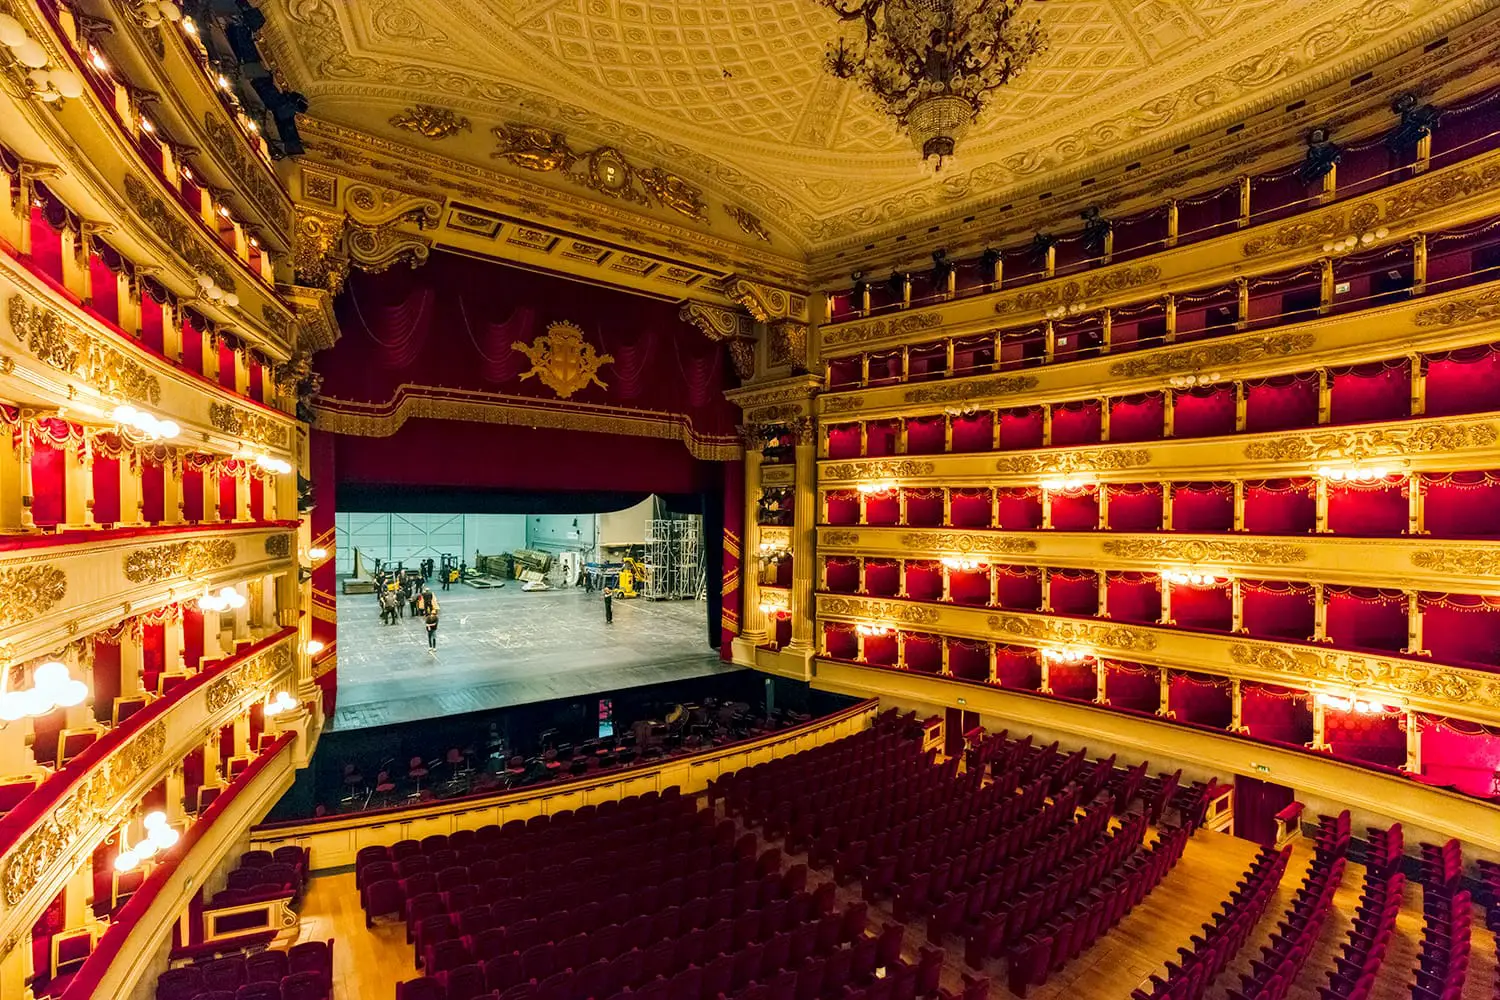 Main concert hall of Teatro alla Scala, an opera house in Milan, Italy